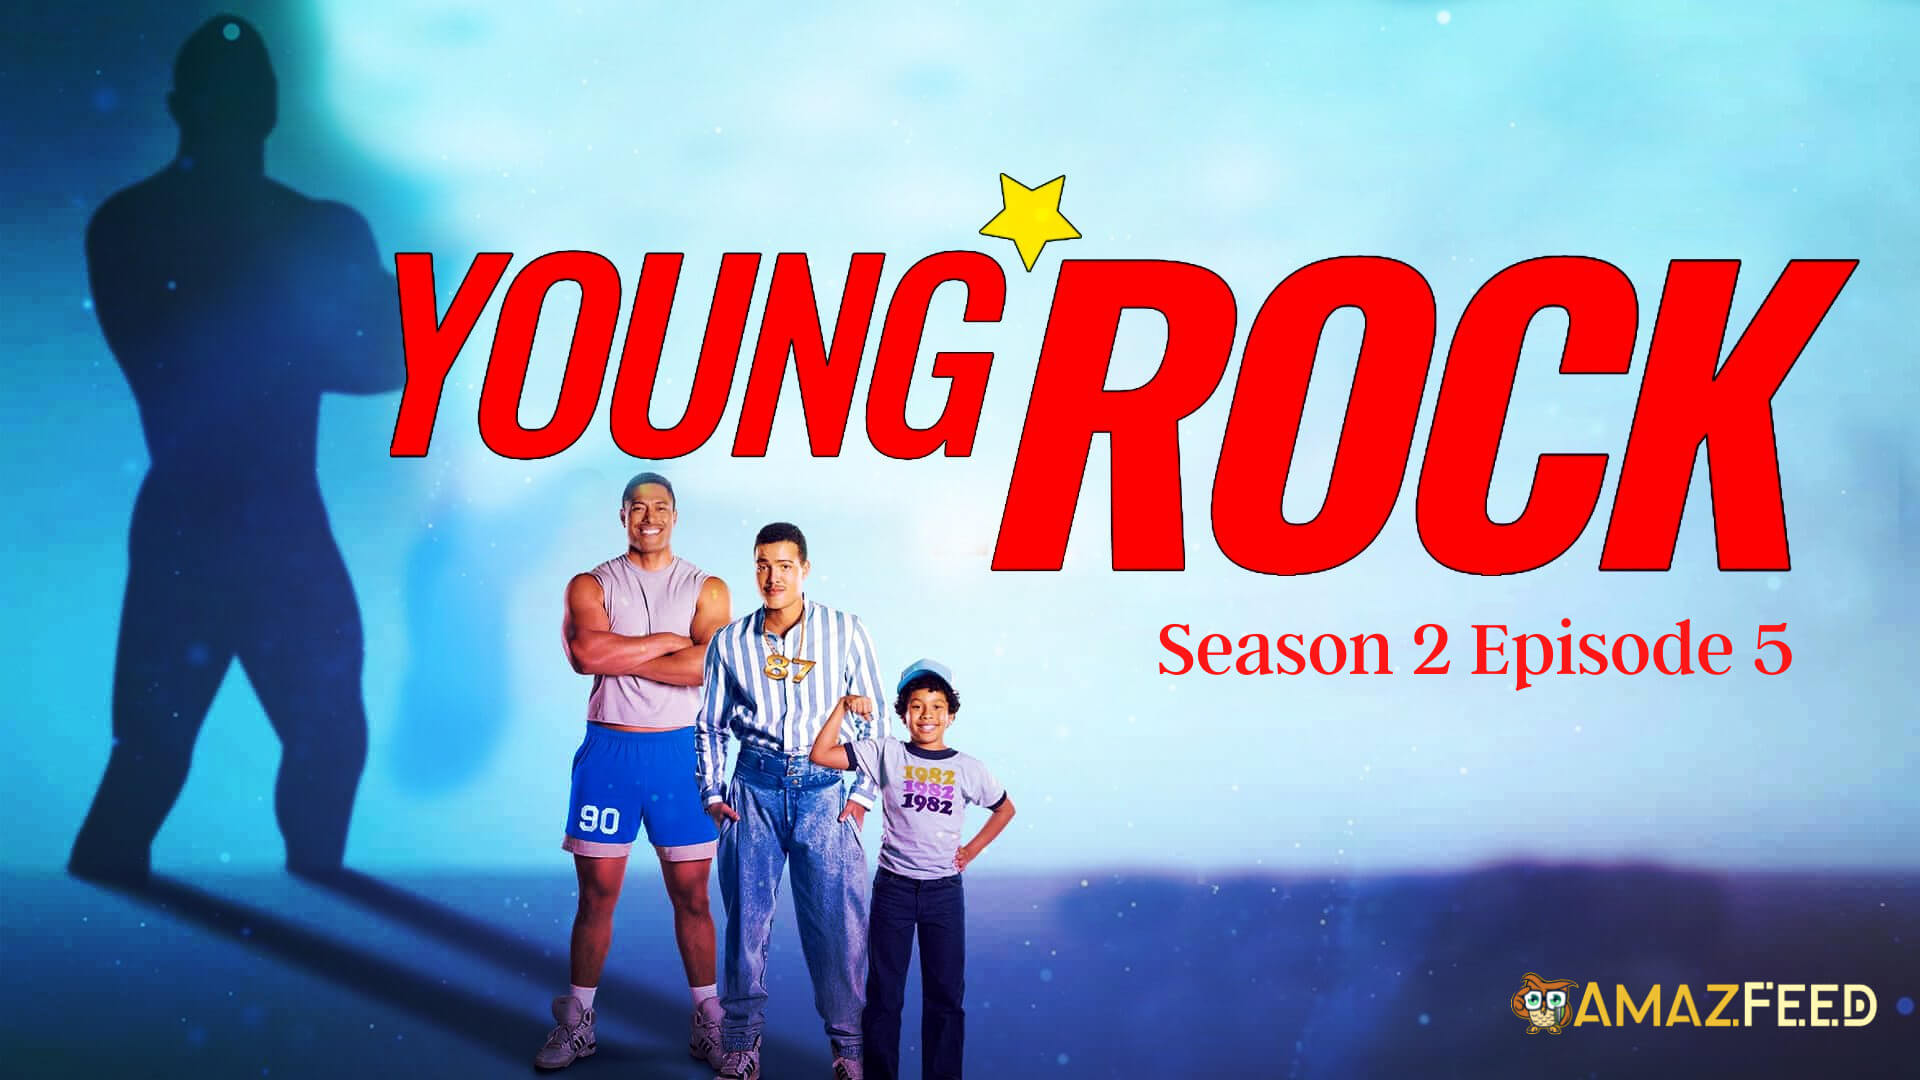 Young Rock Season 2 Episode 5 Release Date